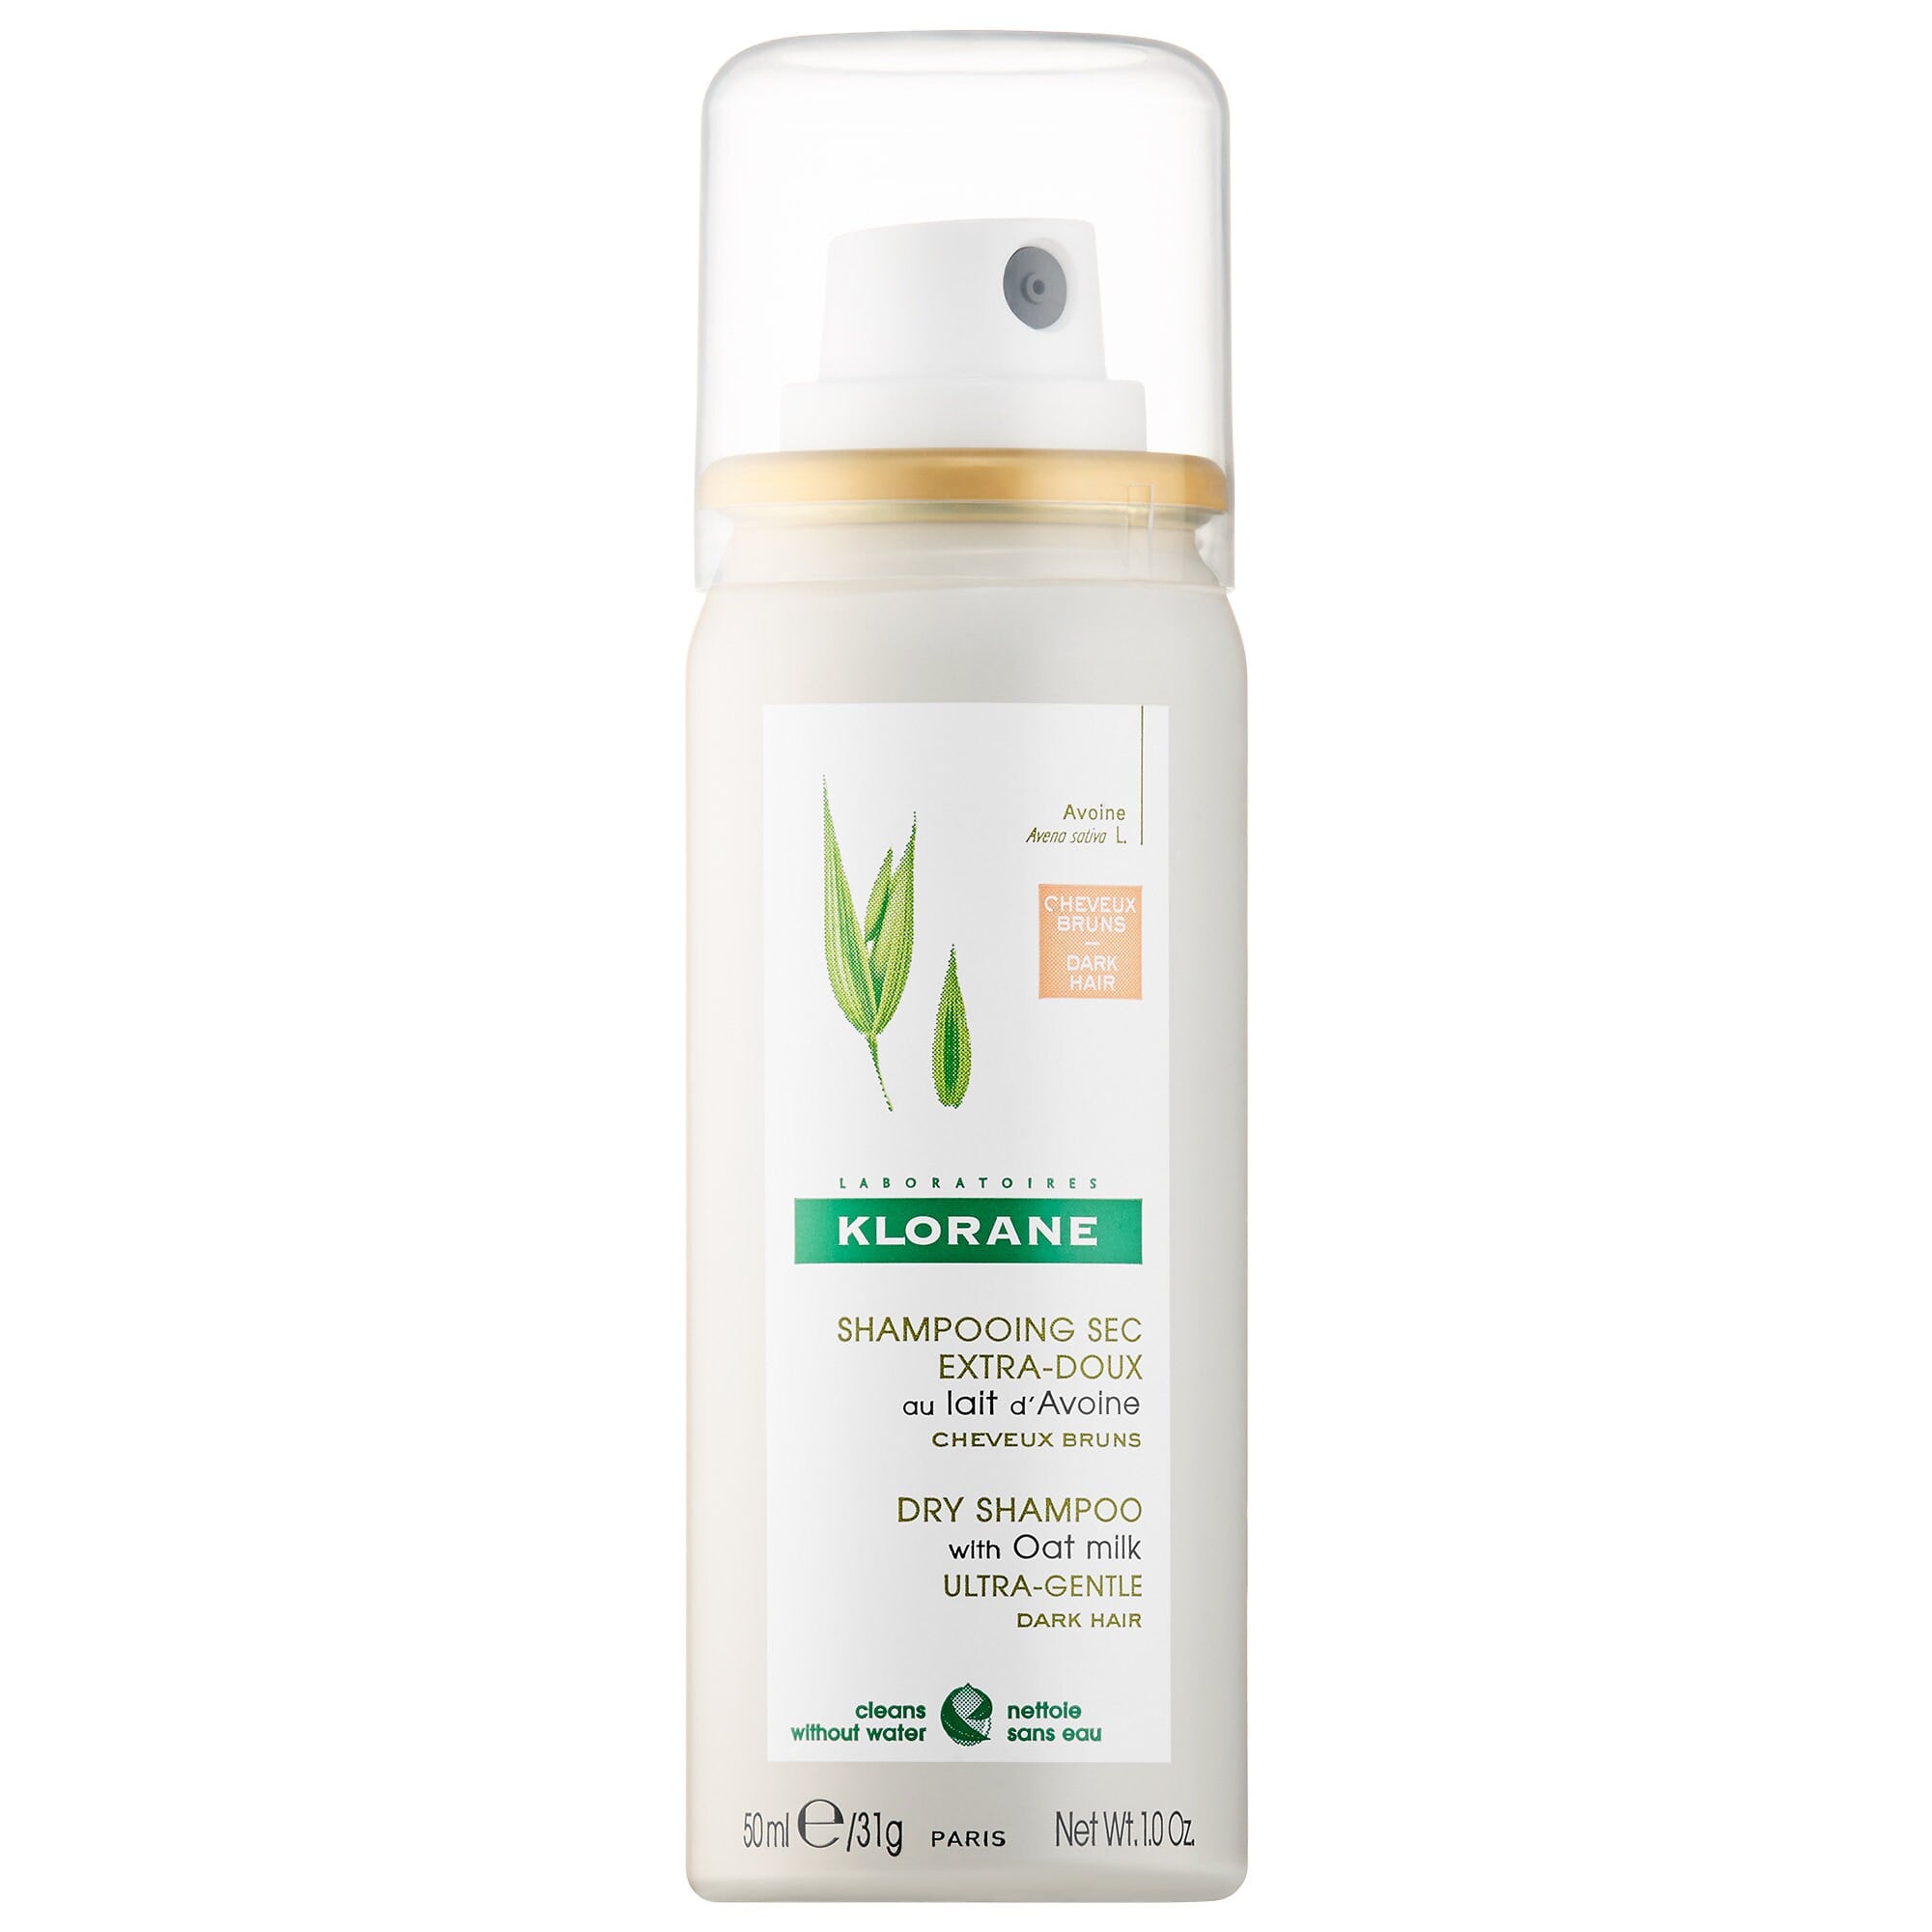 Klorane Dry Shampoo with Oat Milk for Dark Hair – Pro Beauty